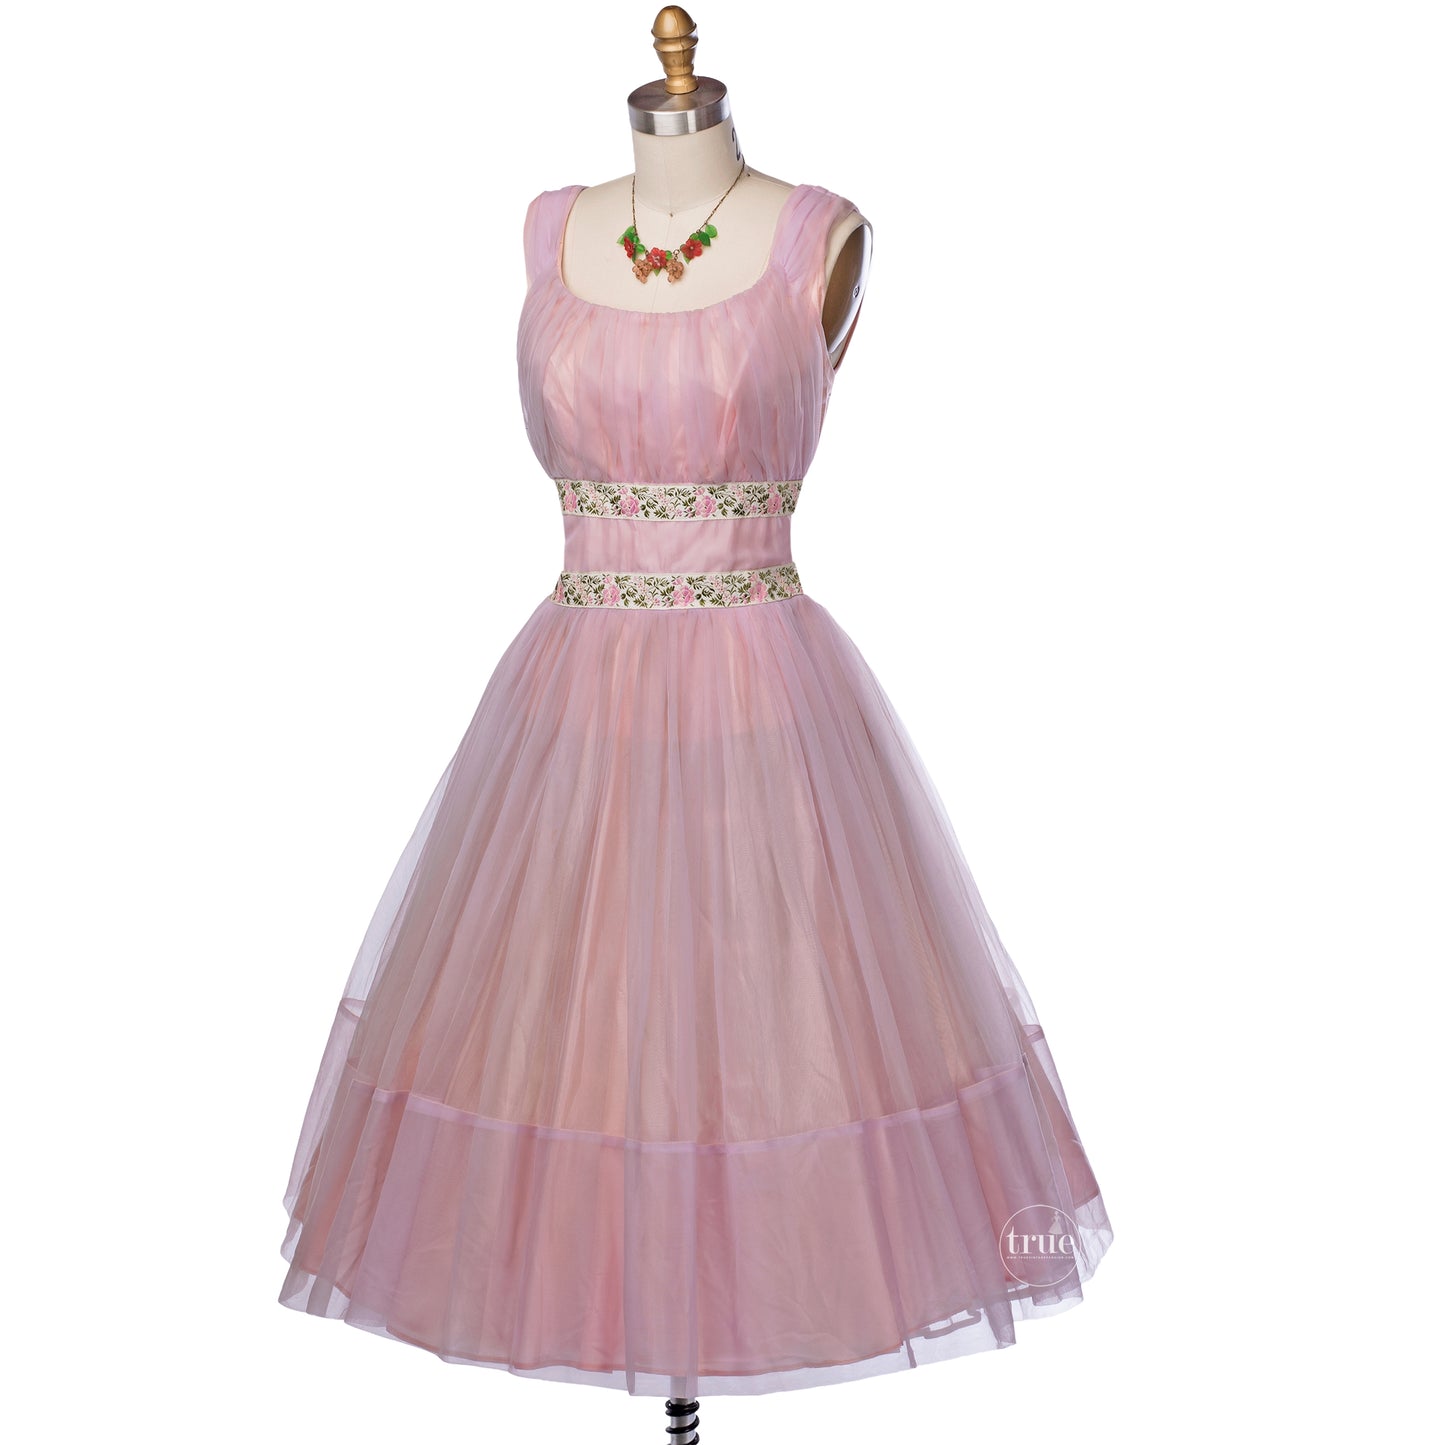 true vintage 1950's dress